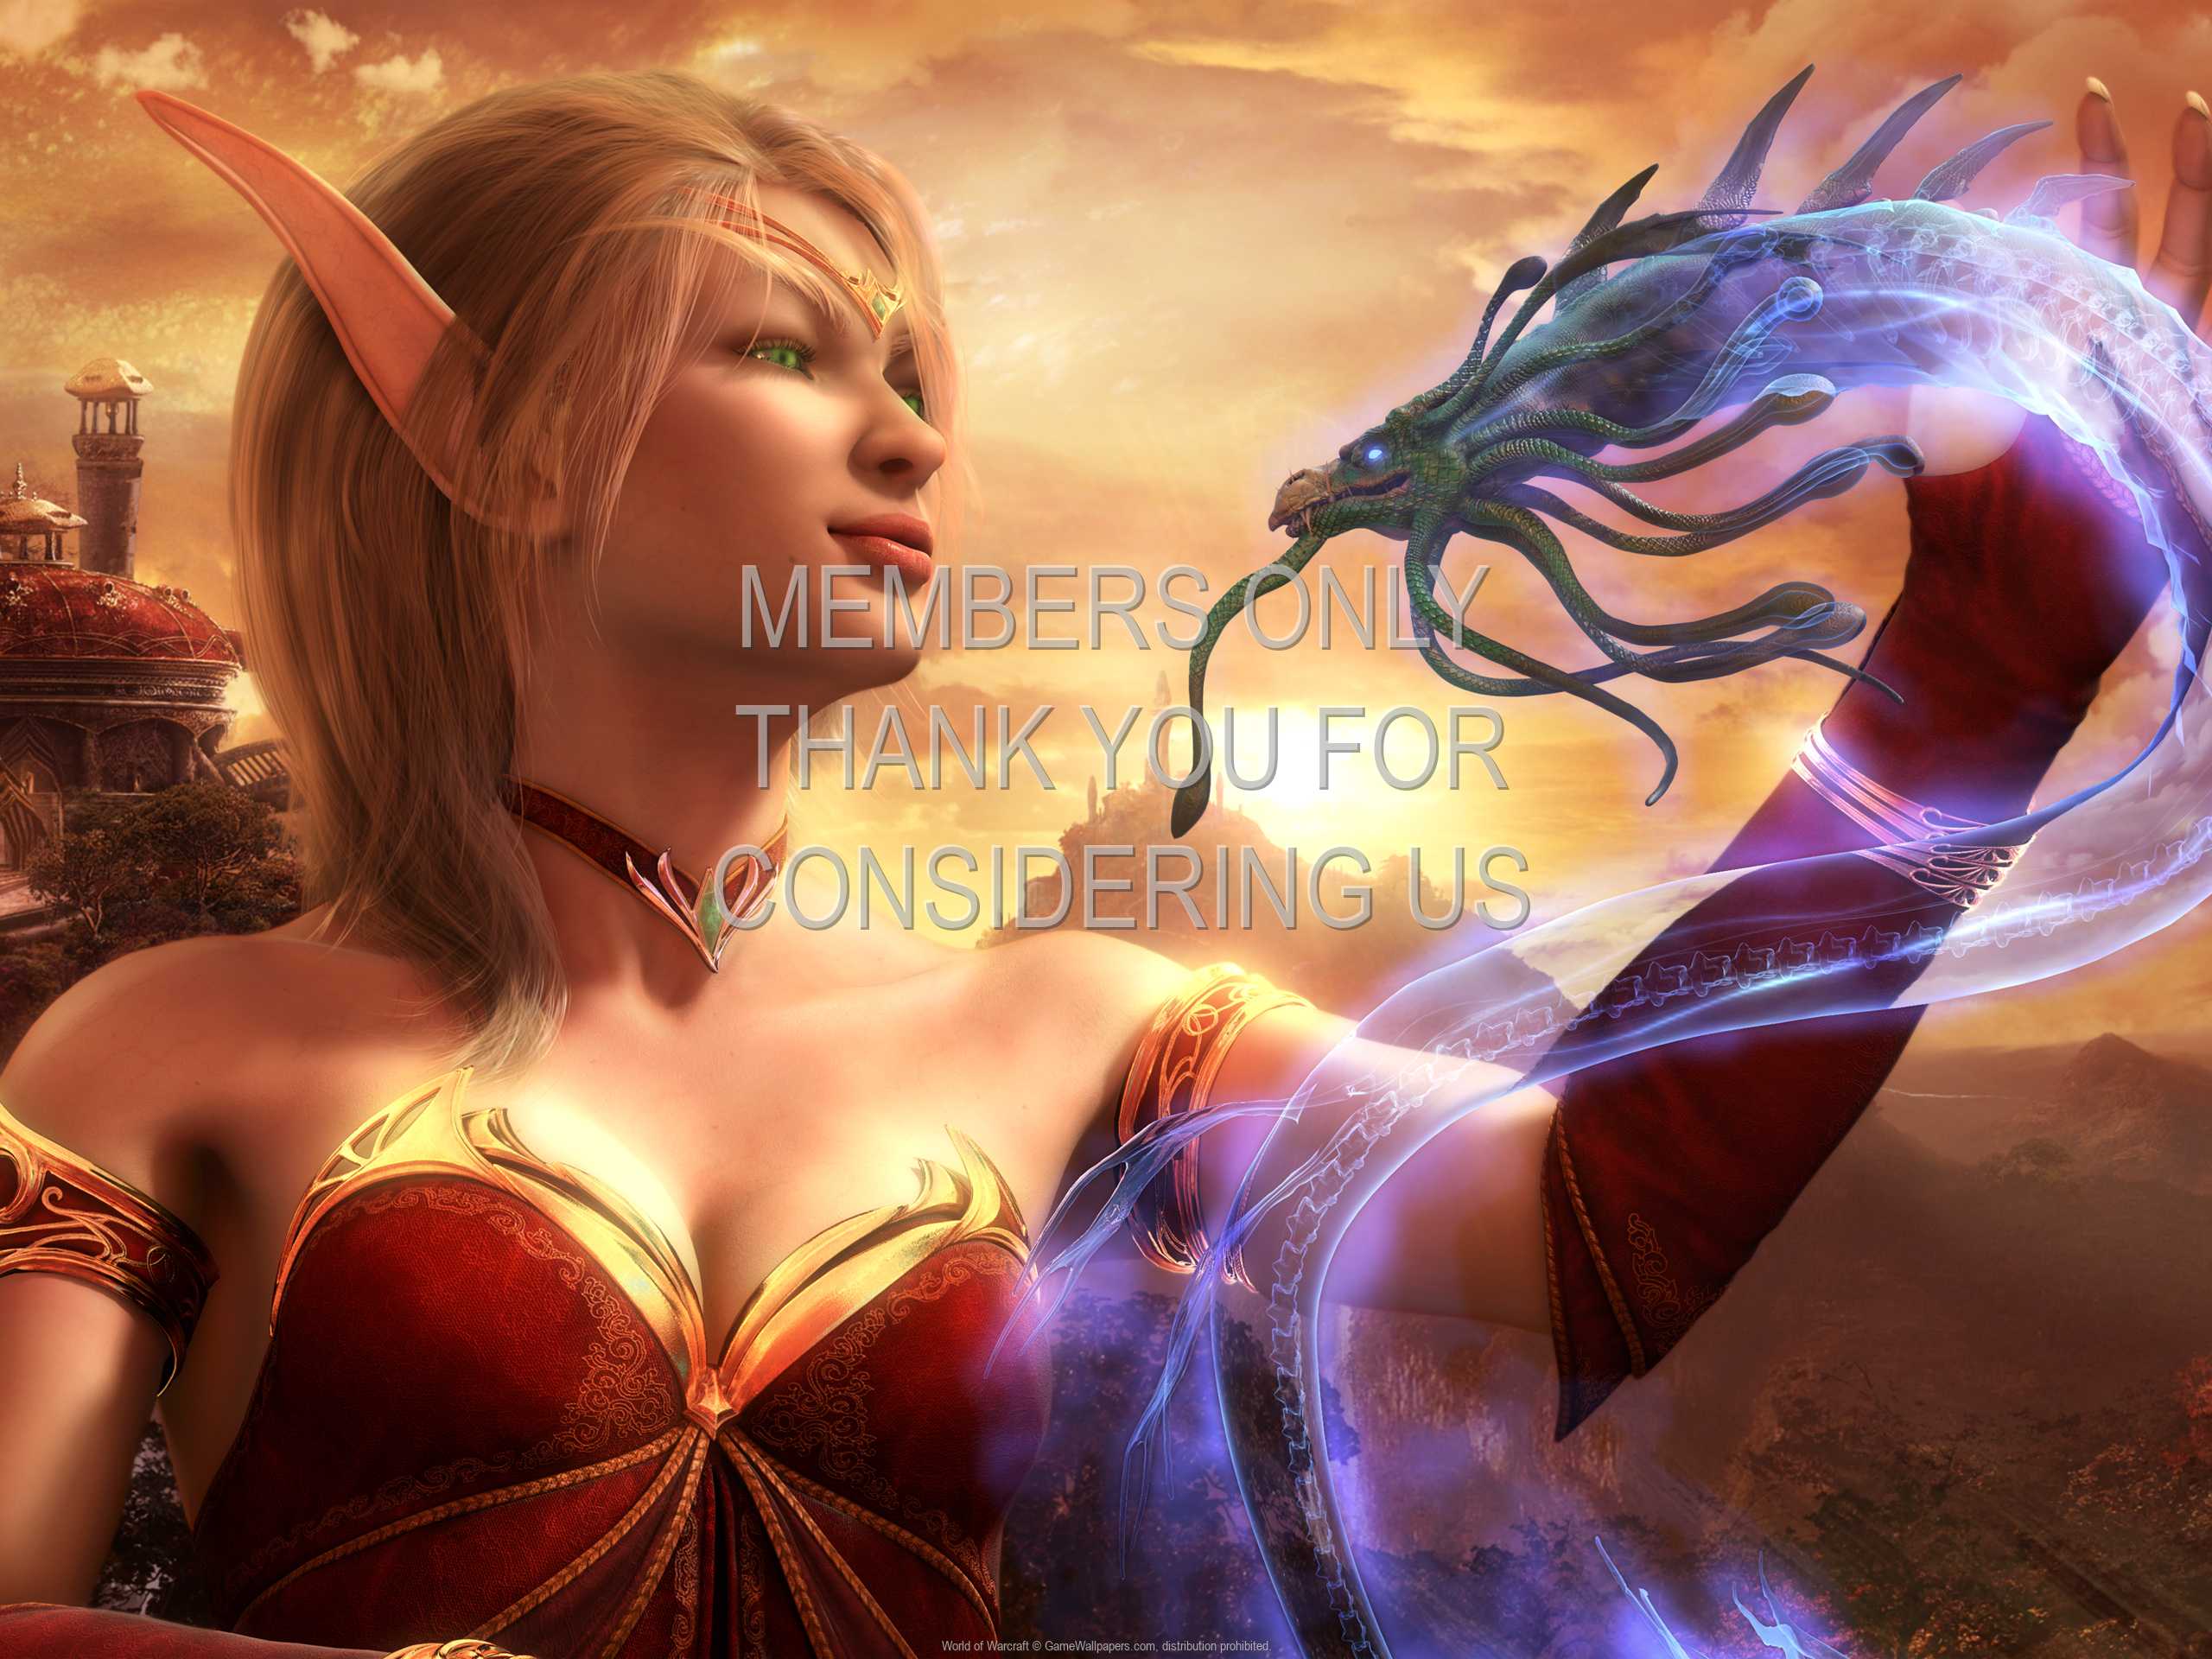 World of Warcraft 1080p%20Horizontal Mobile wallpaper or background 10